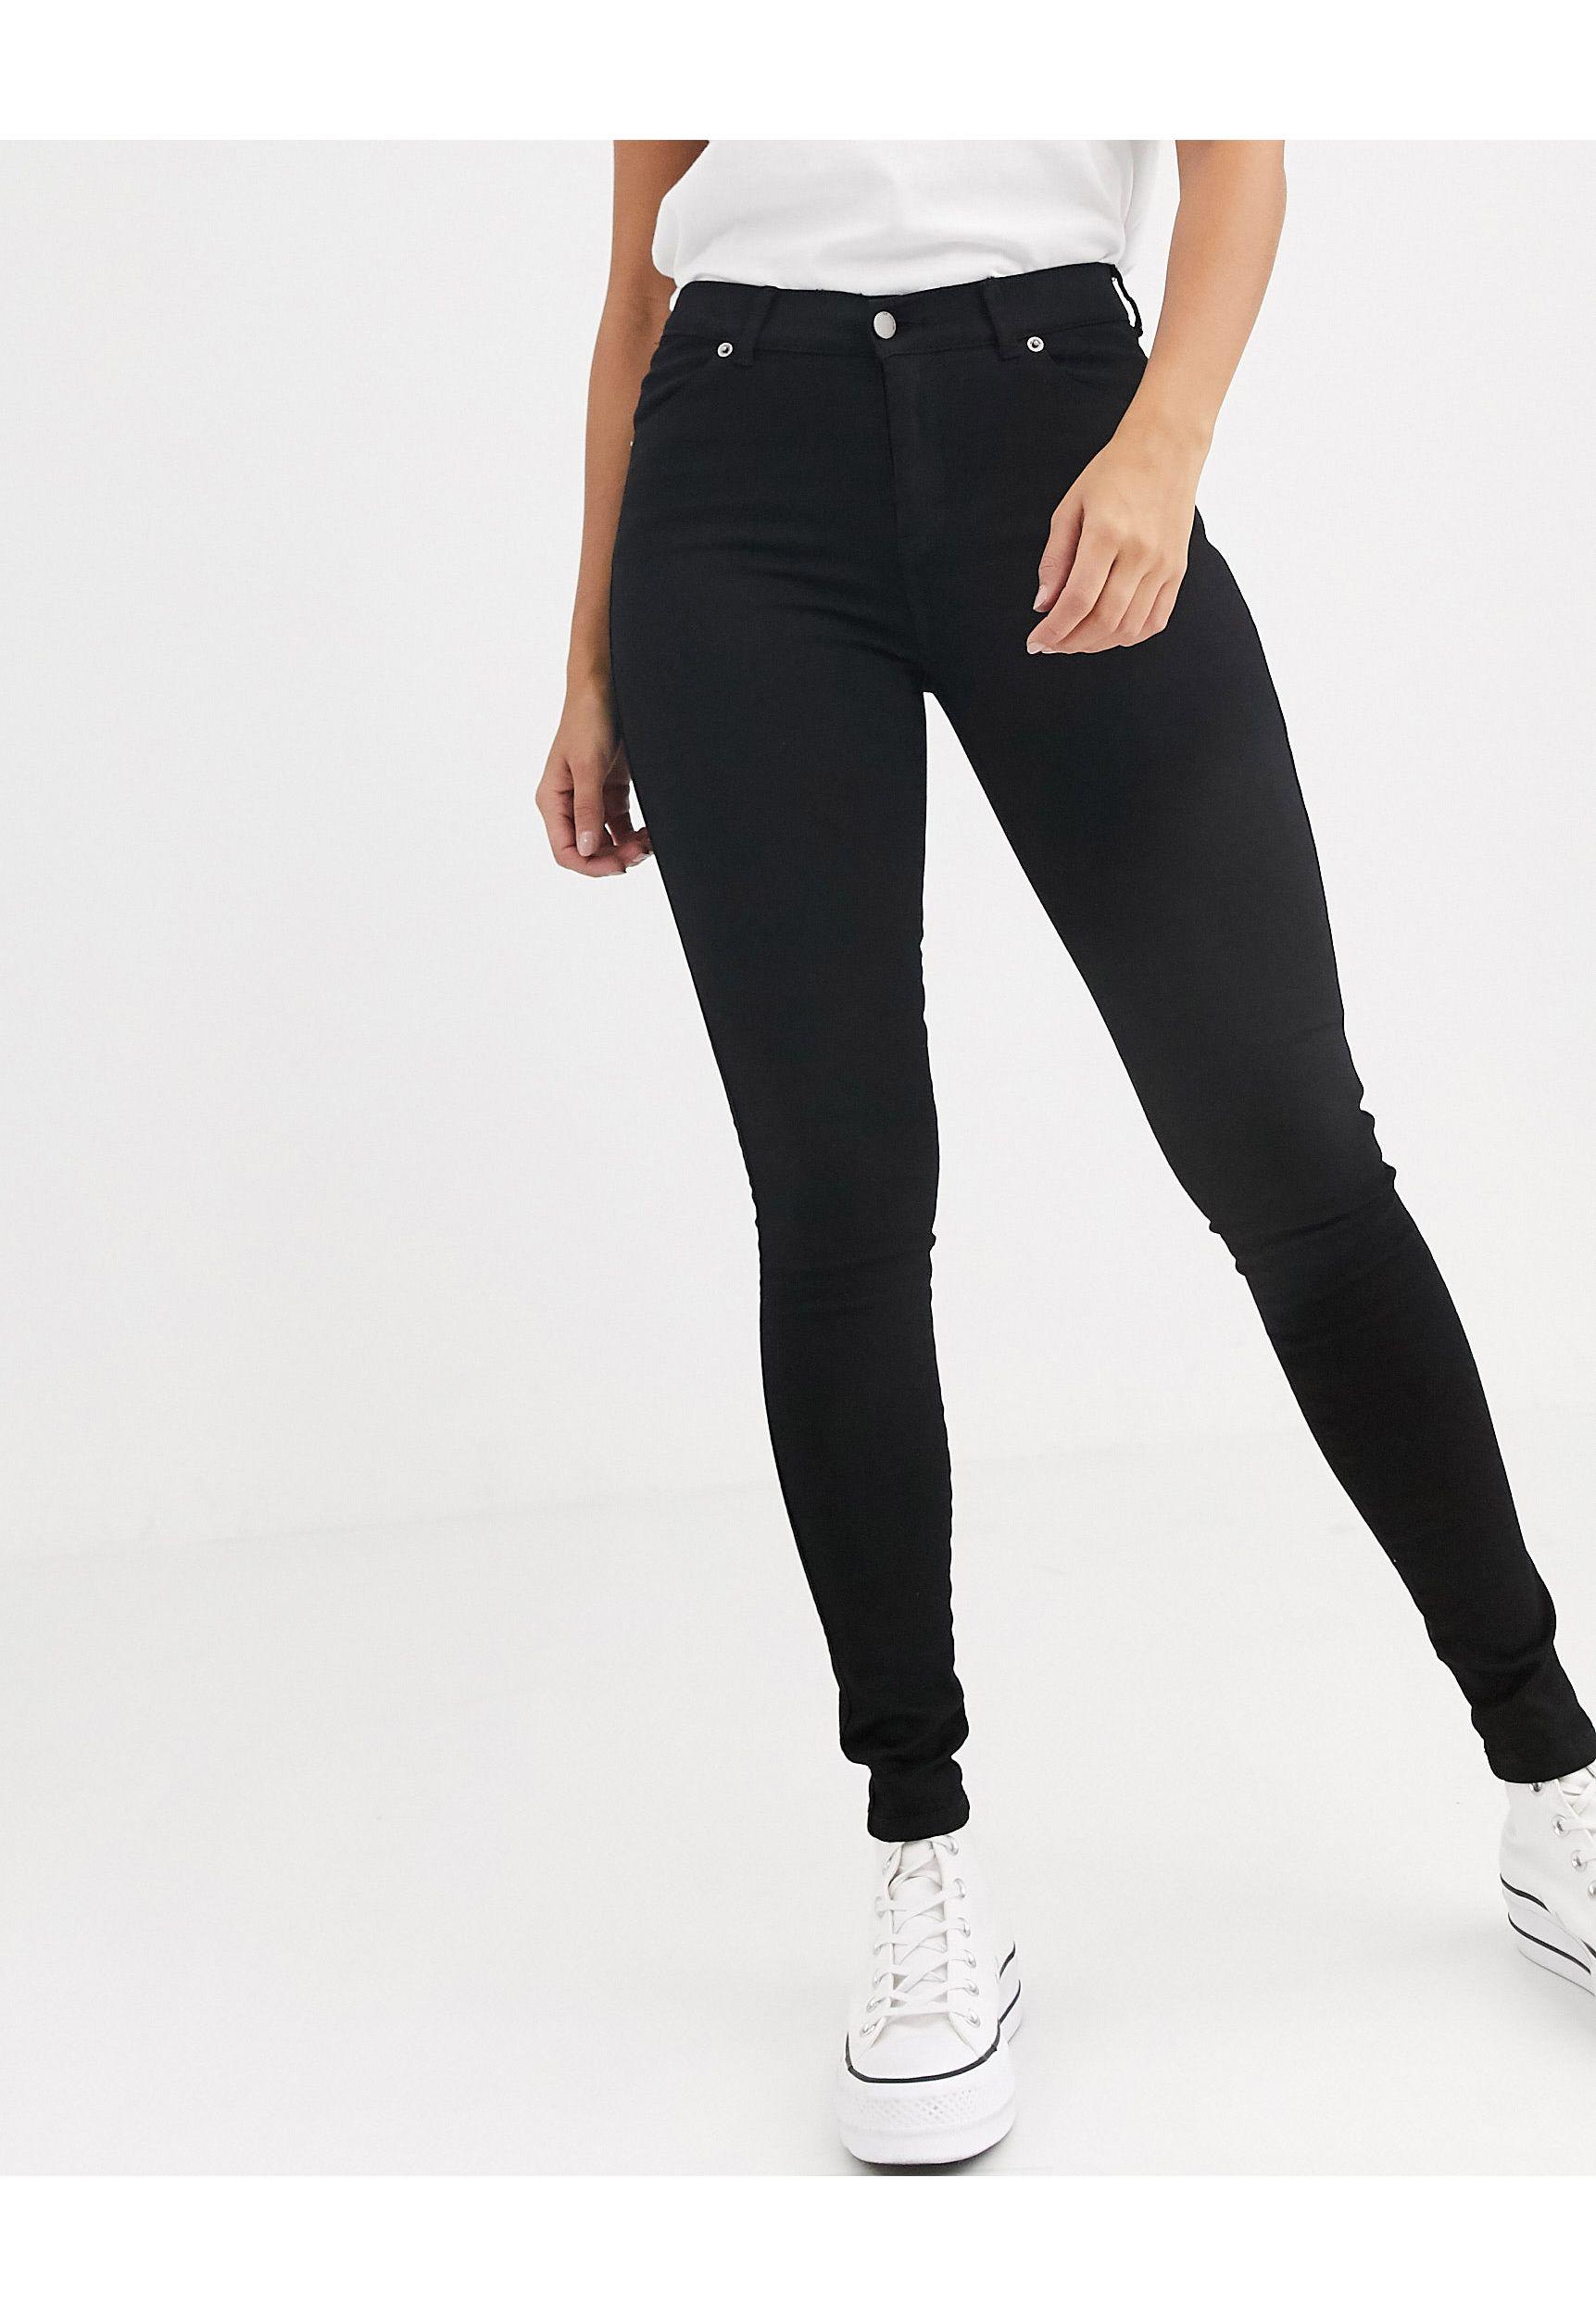 Dr. Denim Denim Lexy Mid Rise Second Skin Super Skinny Jeans in Black - Lyst